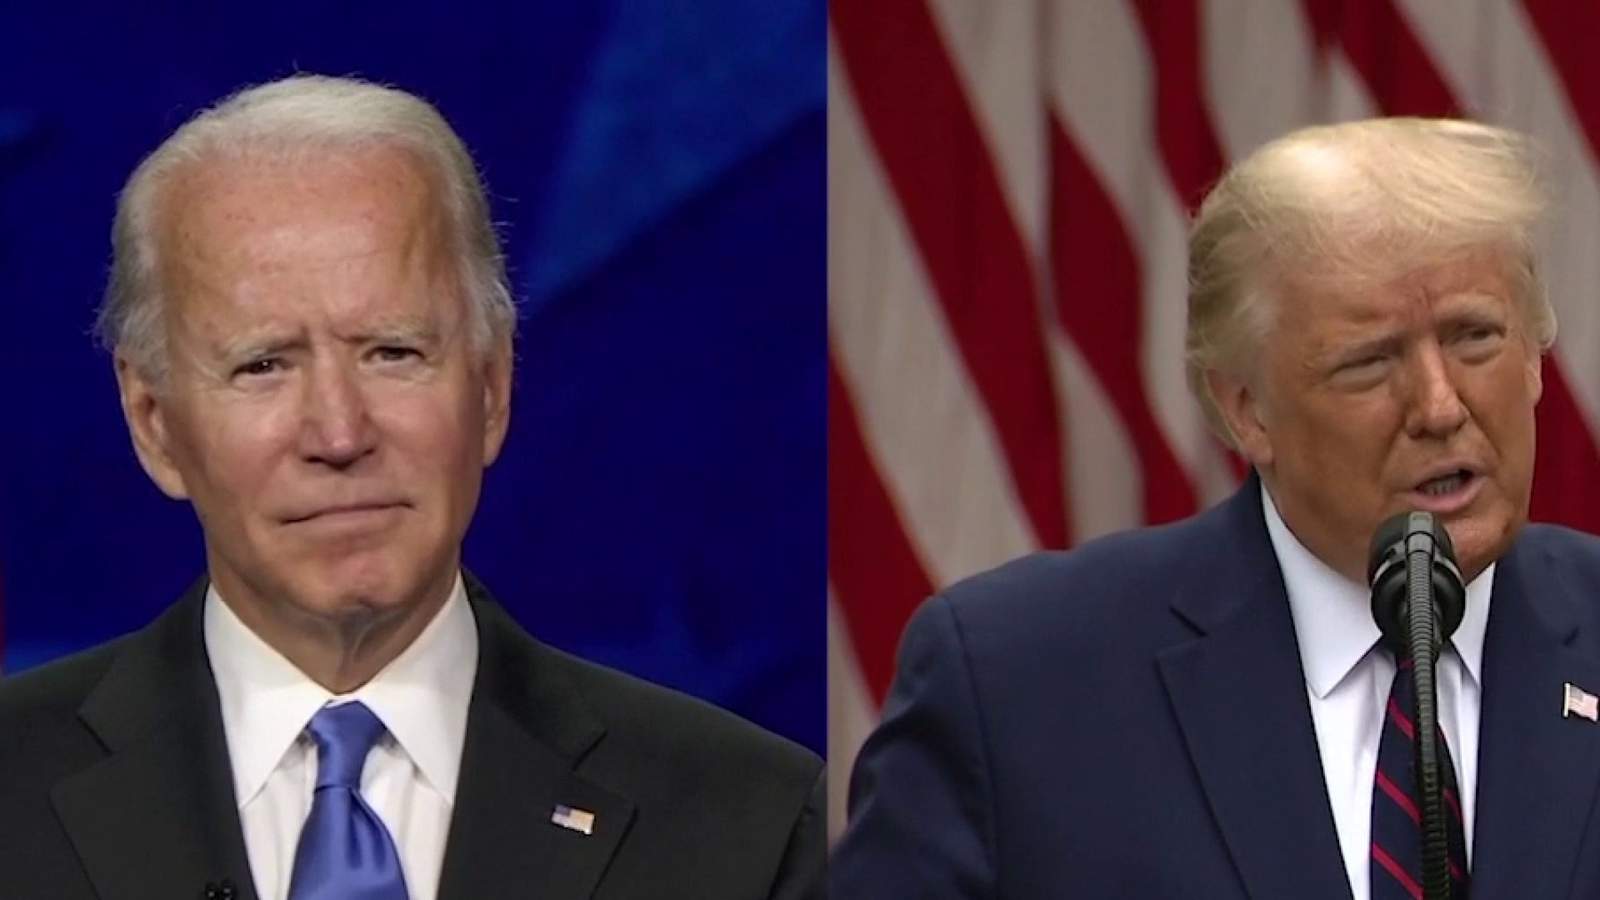 LIVE STREAM: Trump, Biden in first Presidential Debate of 2020 election